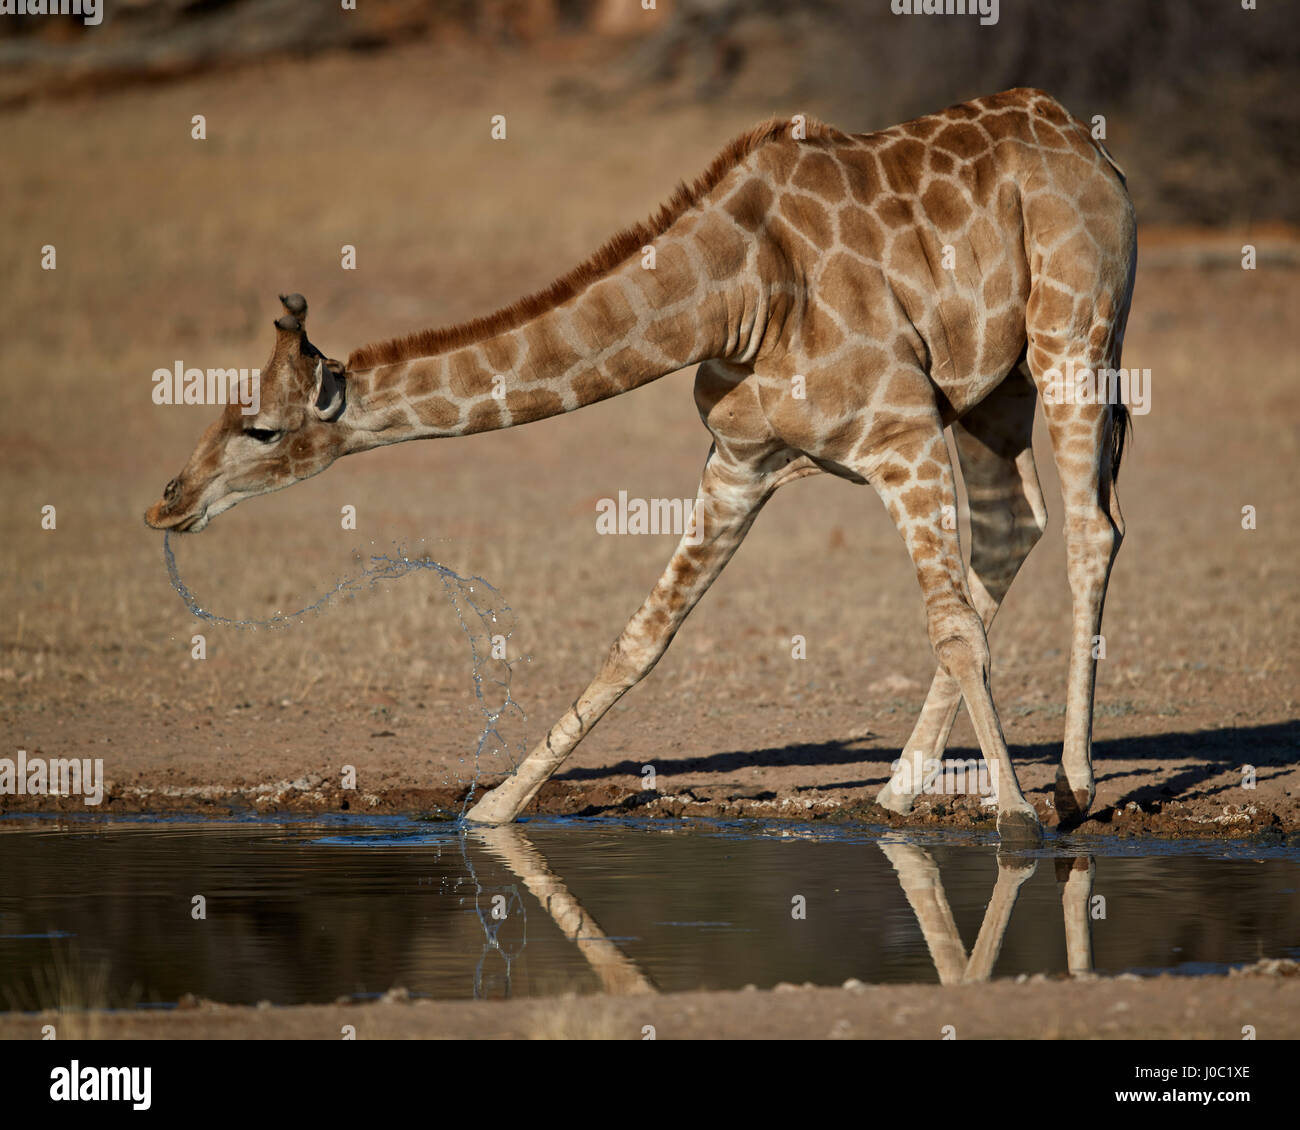 Cape giraffe drinking, Kgalagadi Transfrontier Park, encompassing the former Kalahari Gemsbok National Park Stock Photo